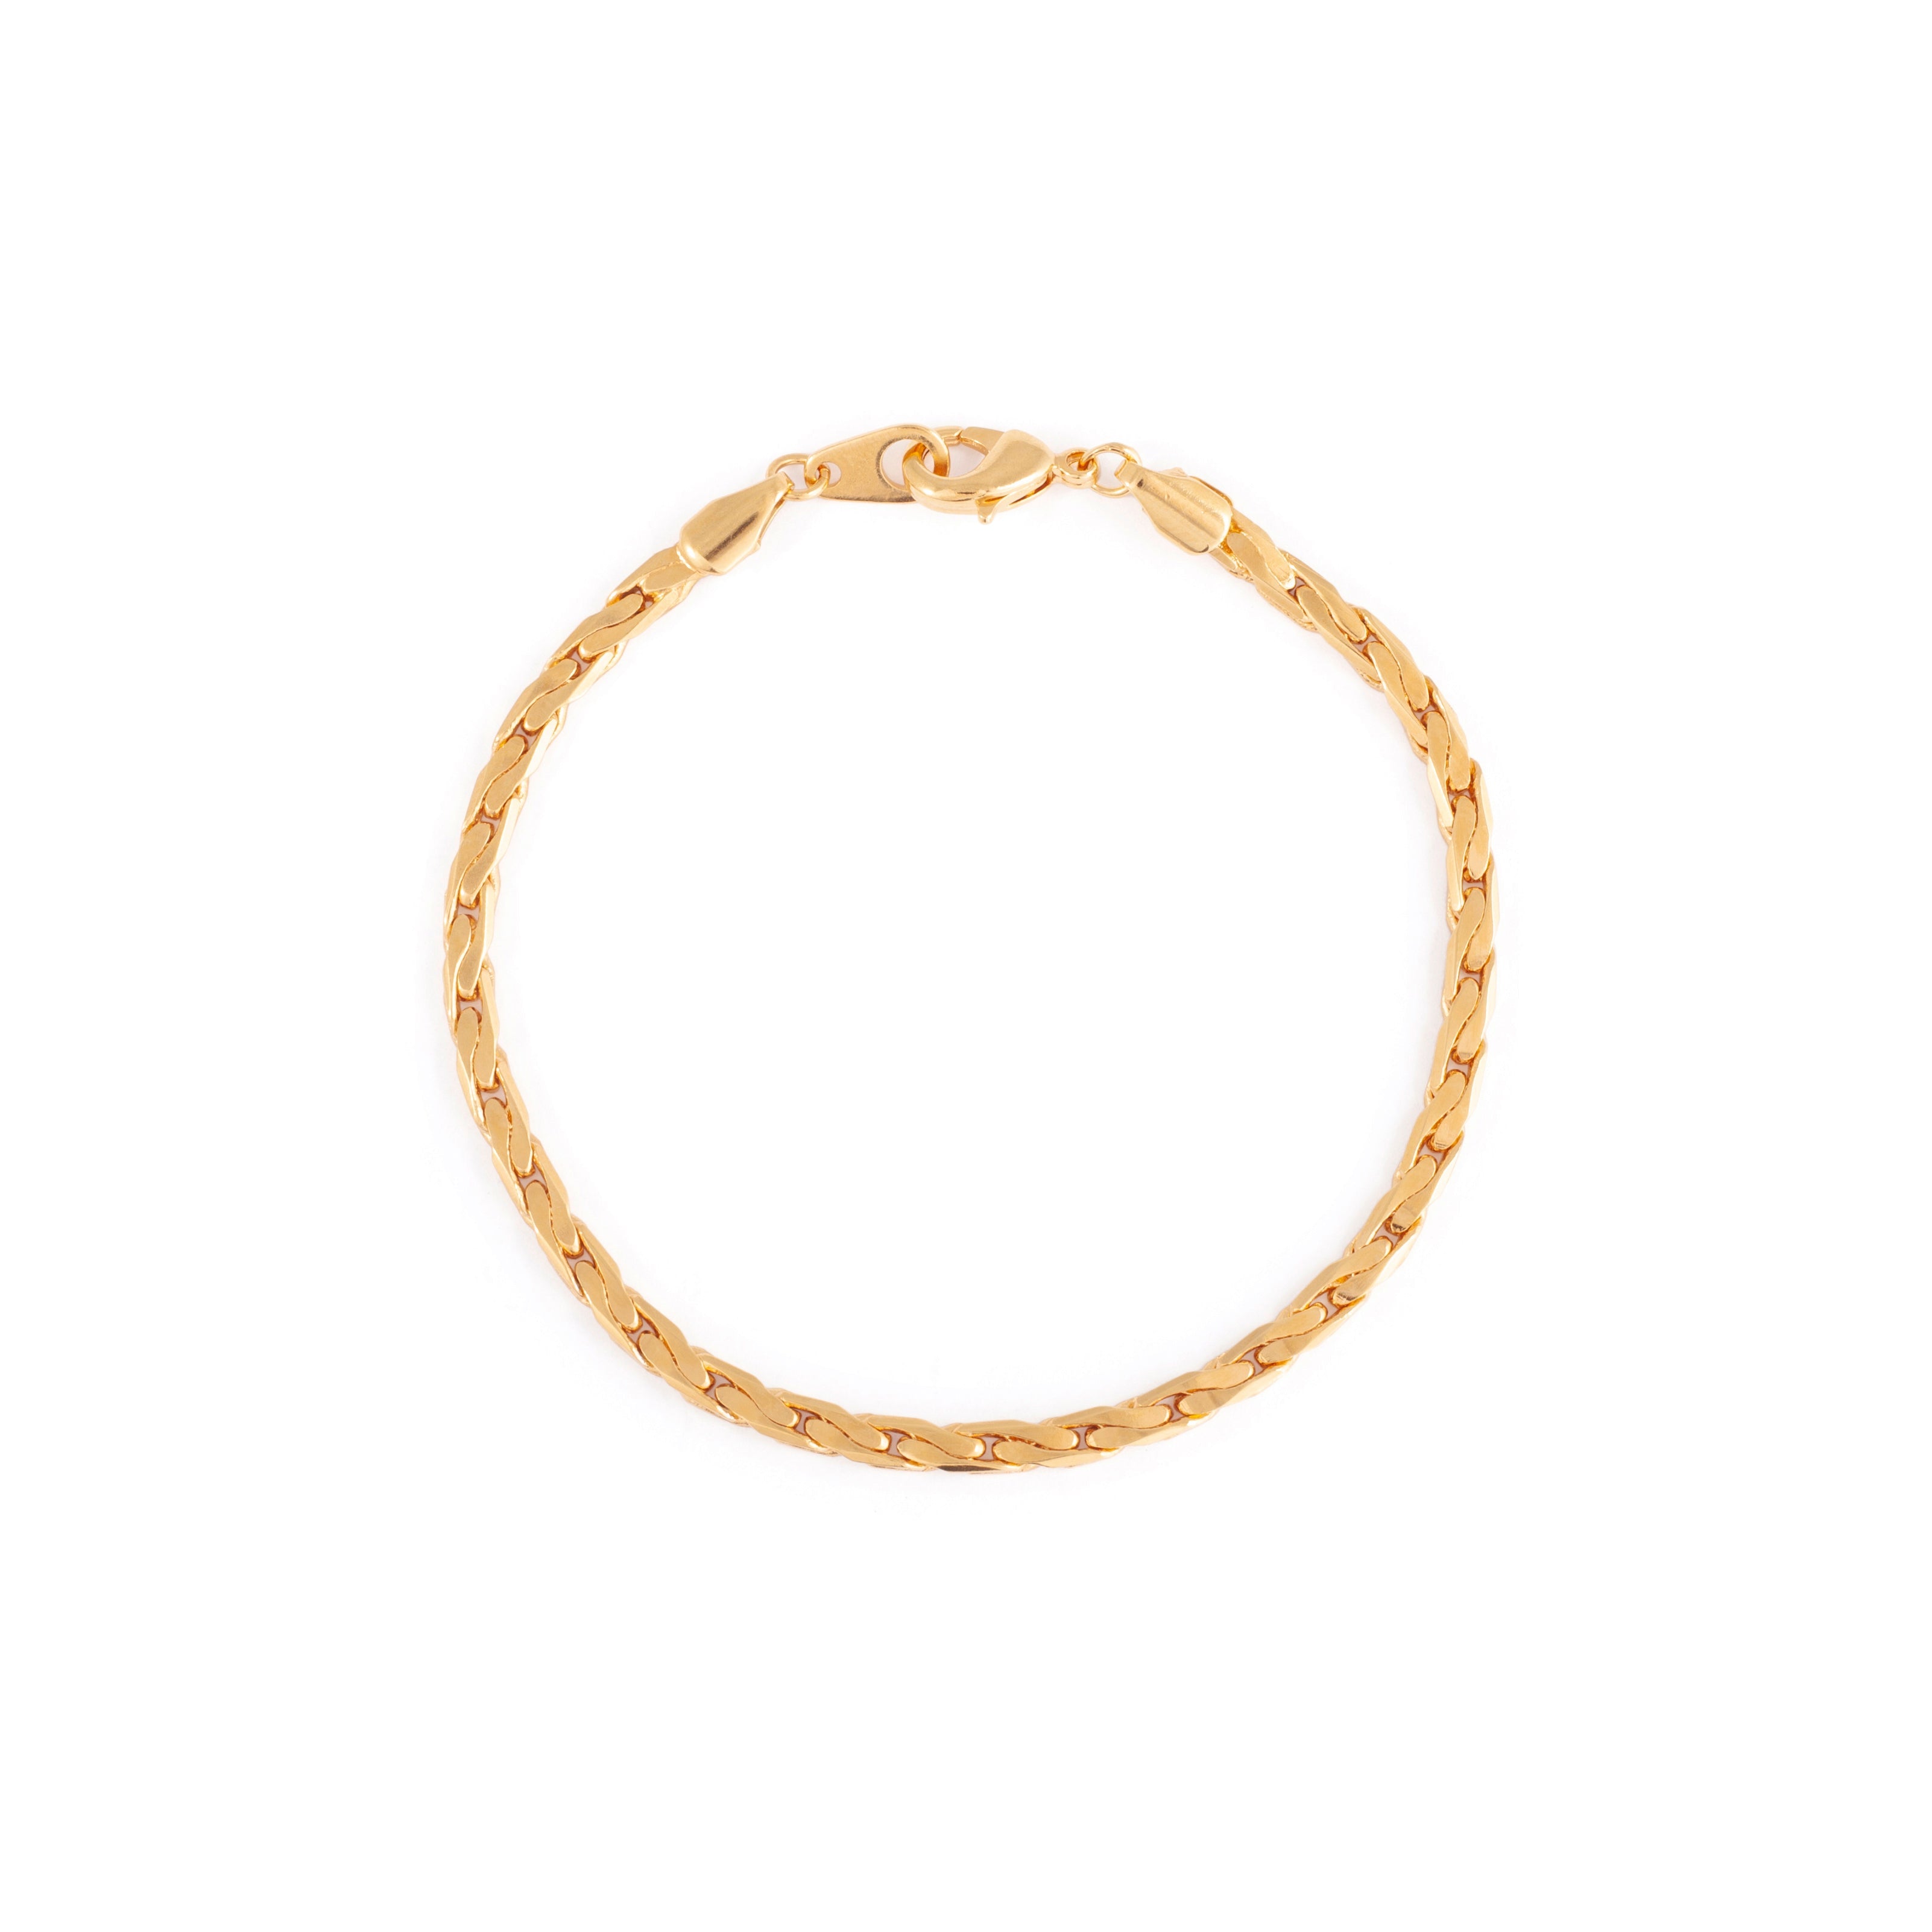 Gold tight link chain bracelet